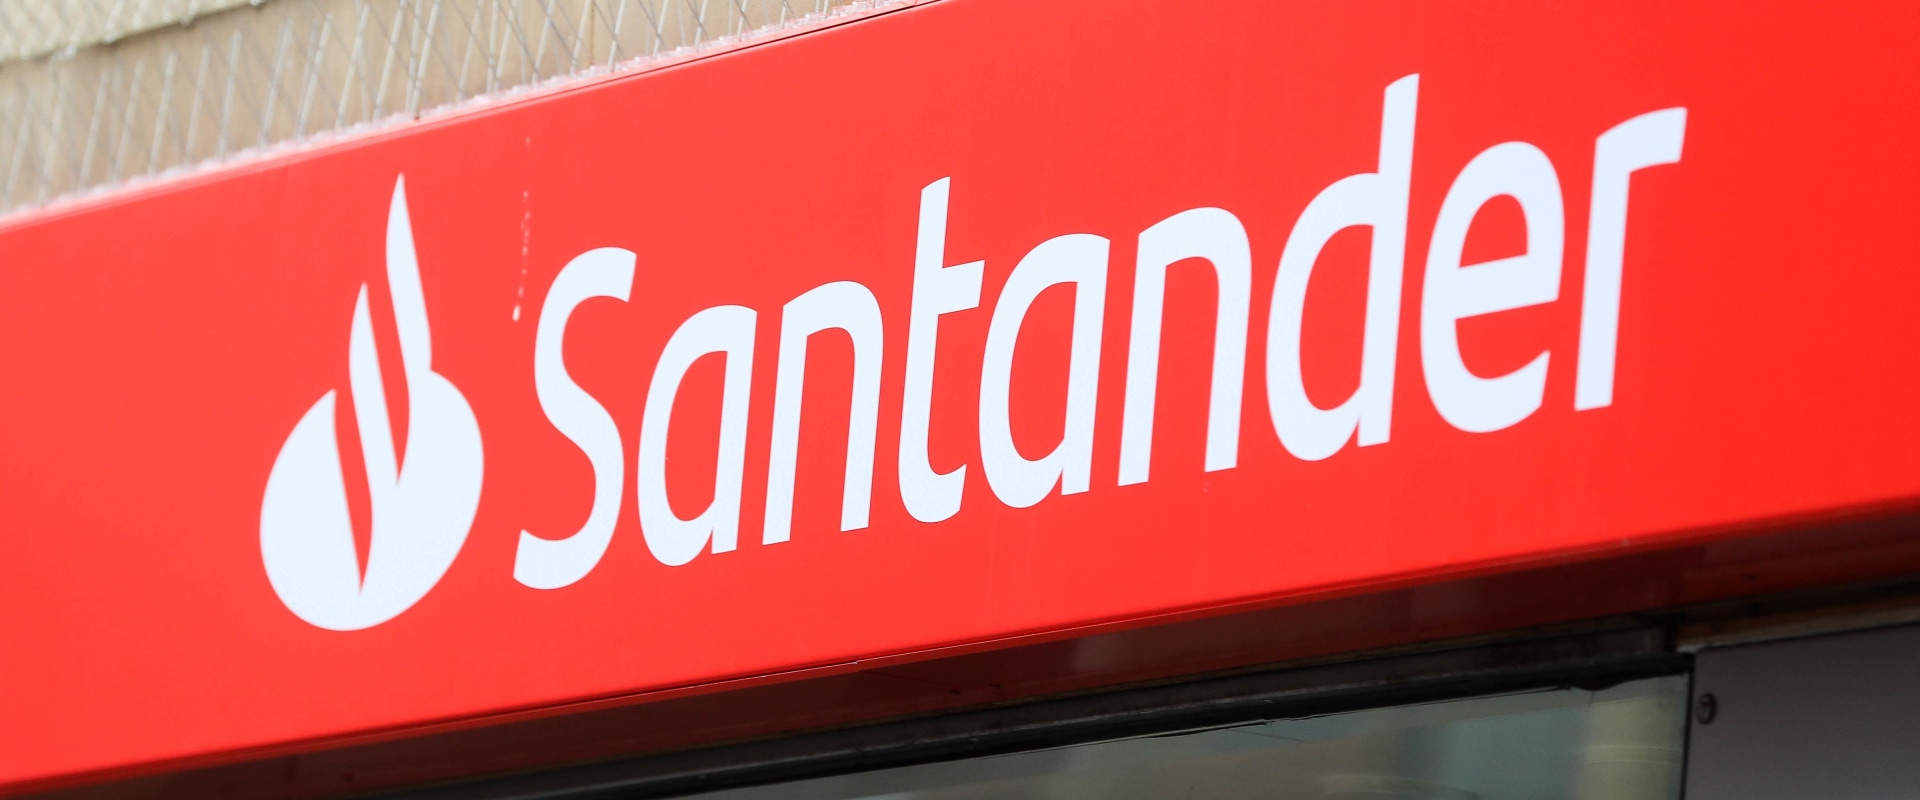 Santander Tracker Mortgage Rates Explained